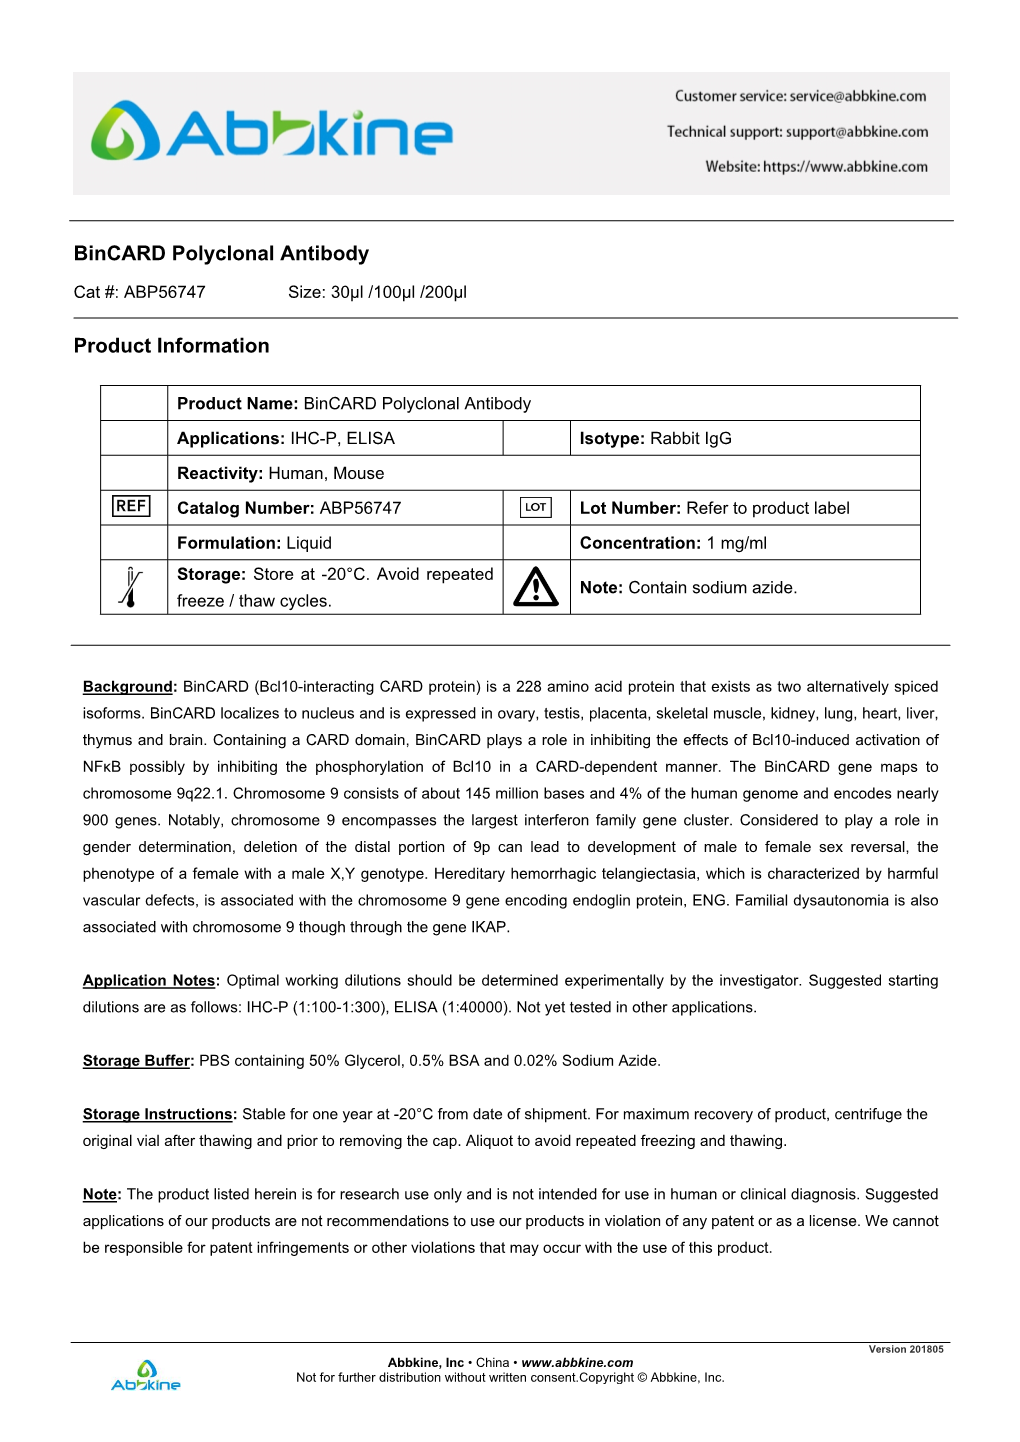 Bincard Polyclonal Antibody Product Information